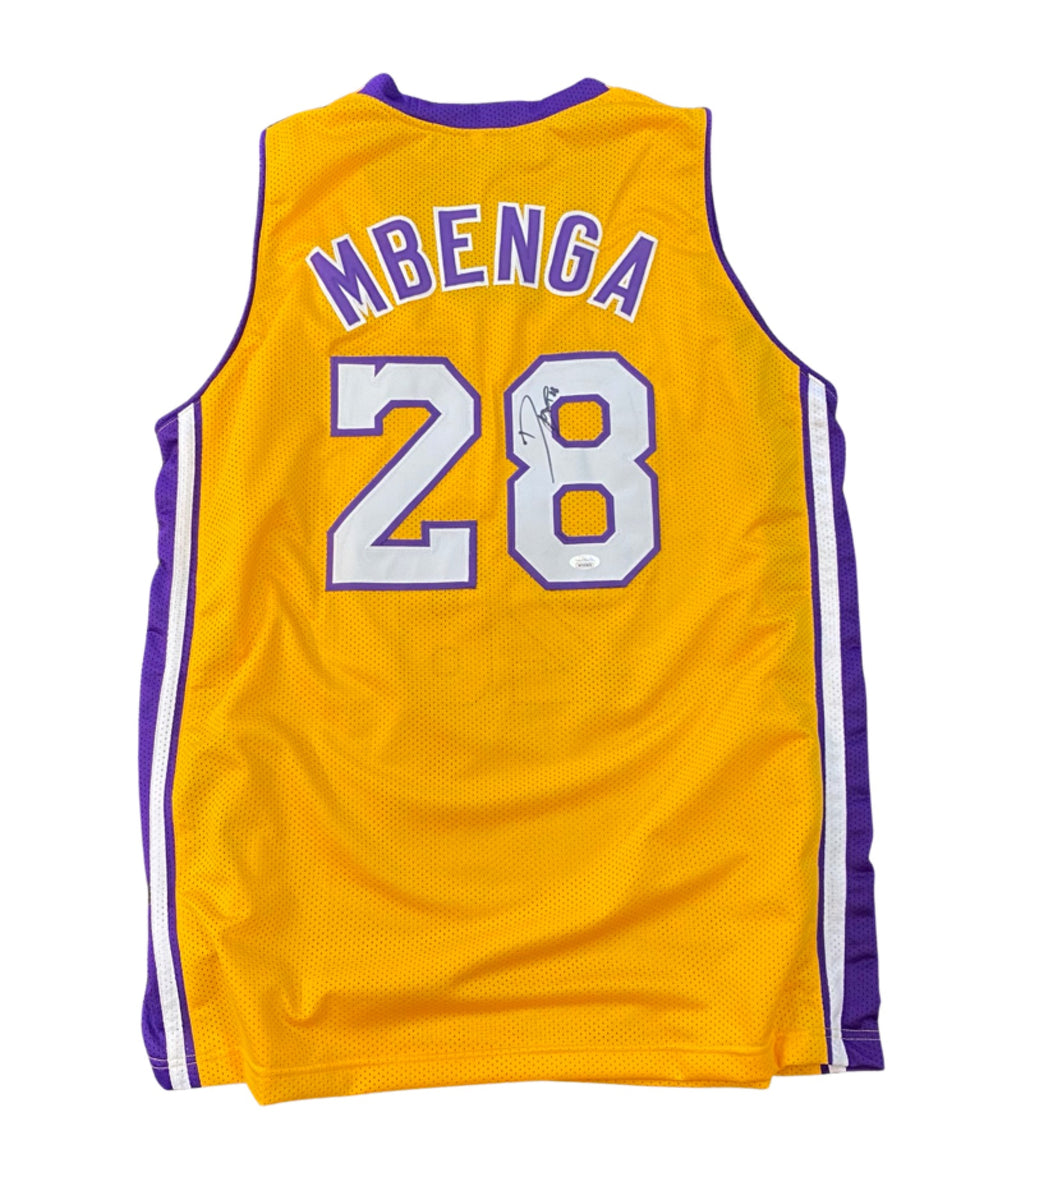 DJ Mbenga Signed Los Angeles Lakers 11x14 Photo BECKETT BAS